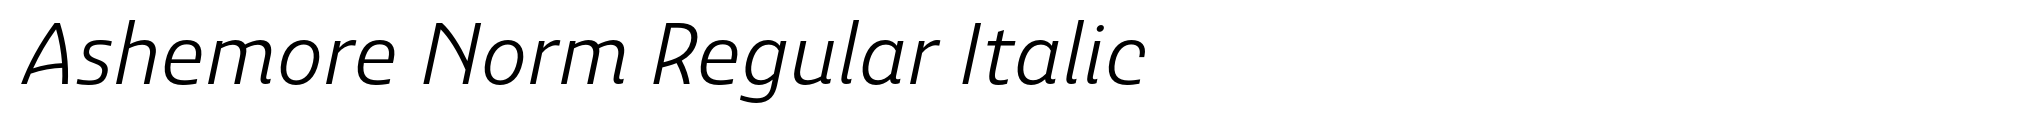 Ashemore Norm Regular Italic image